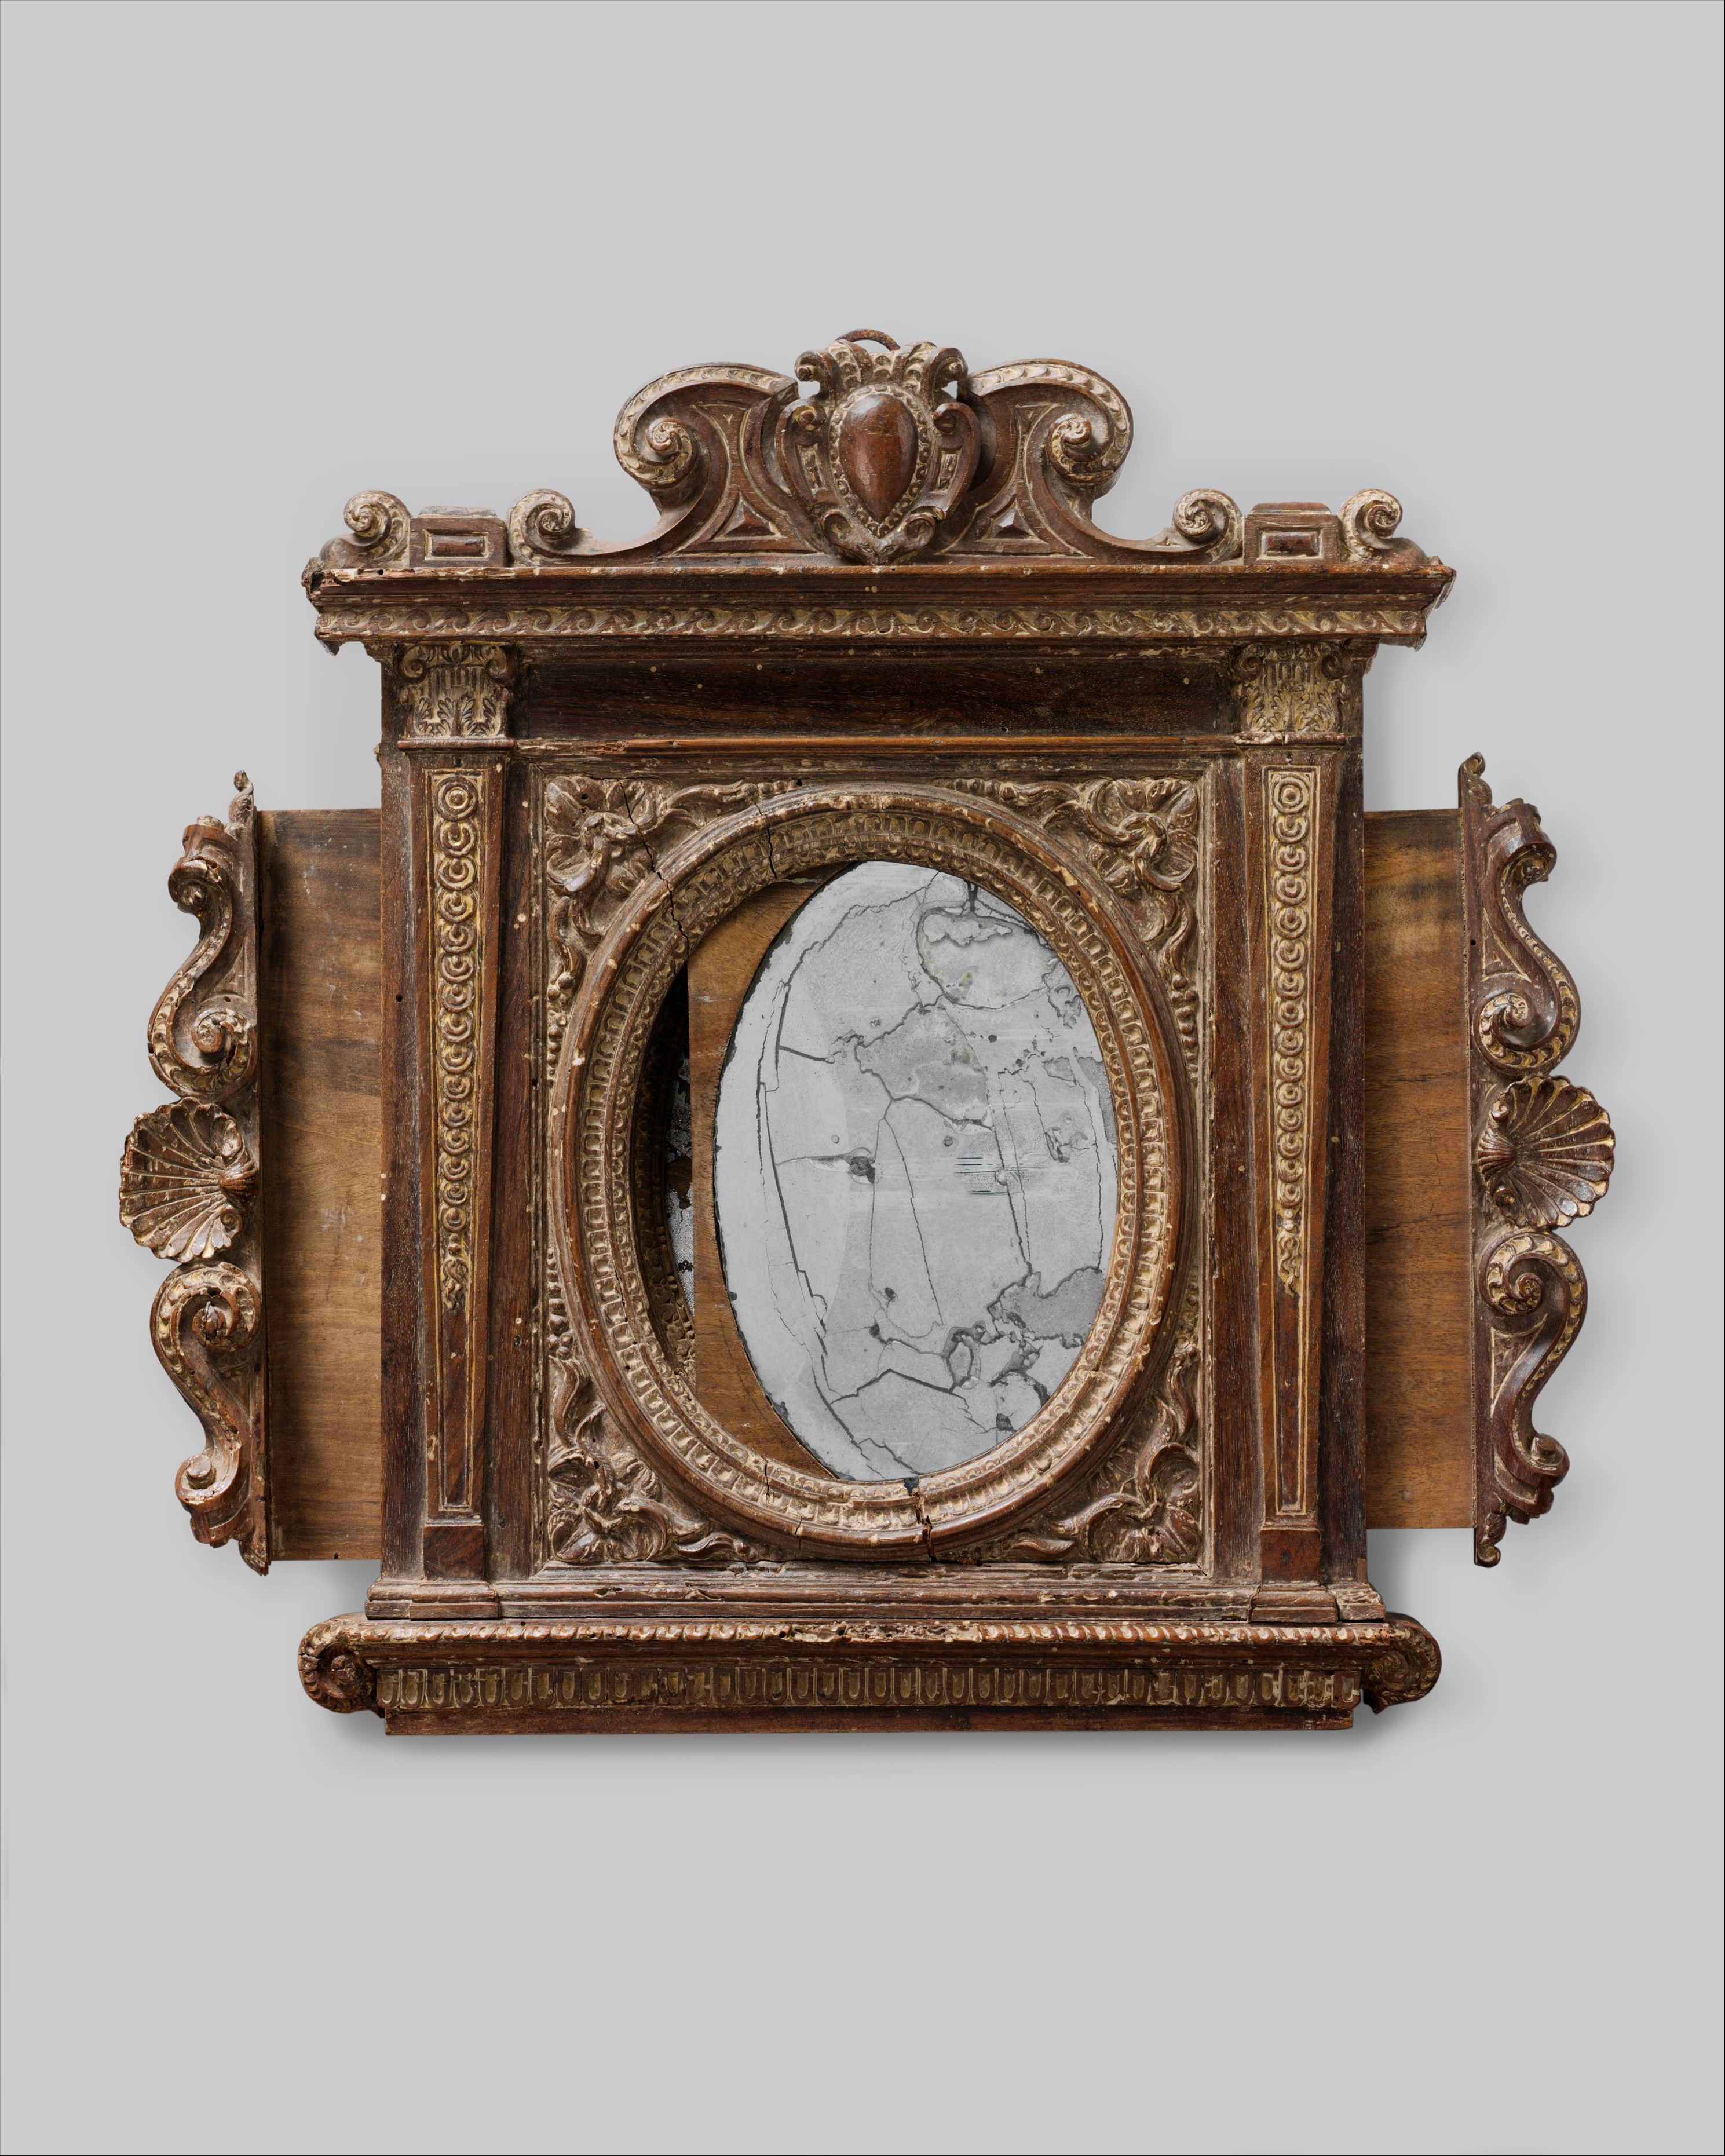 Italian Renaissance Frames, Essay, The Metropolitan Museum of Art